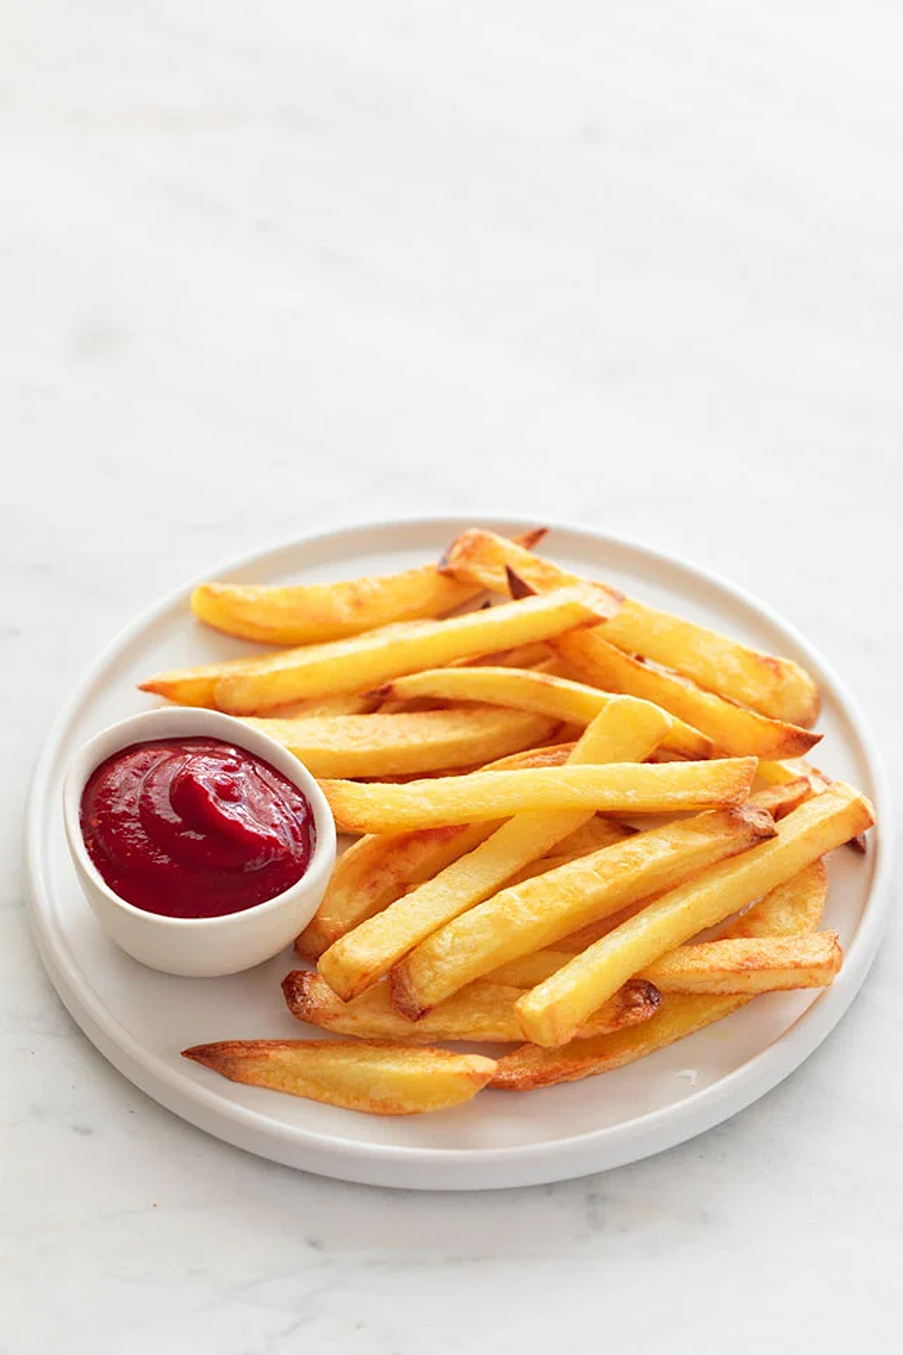 enjoy a plate of proper ‘seaside chips!’